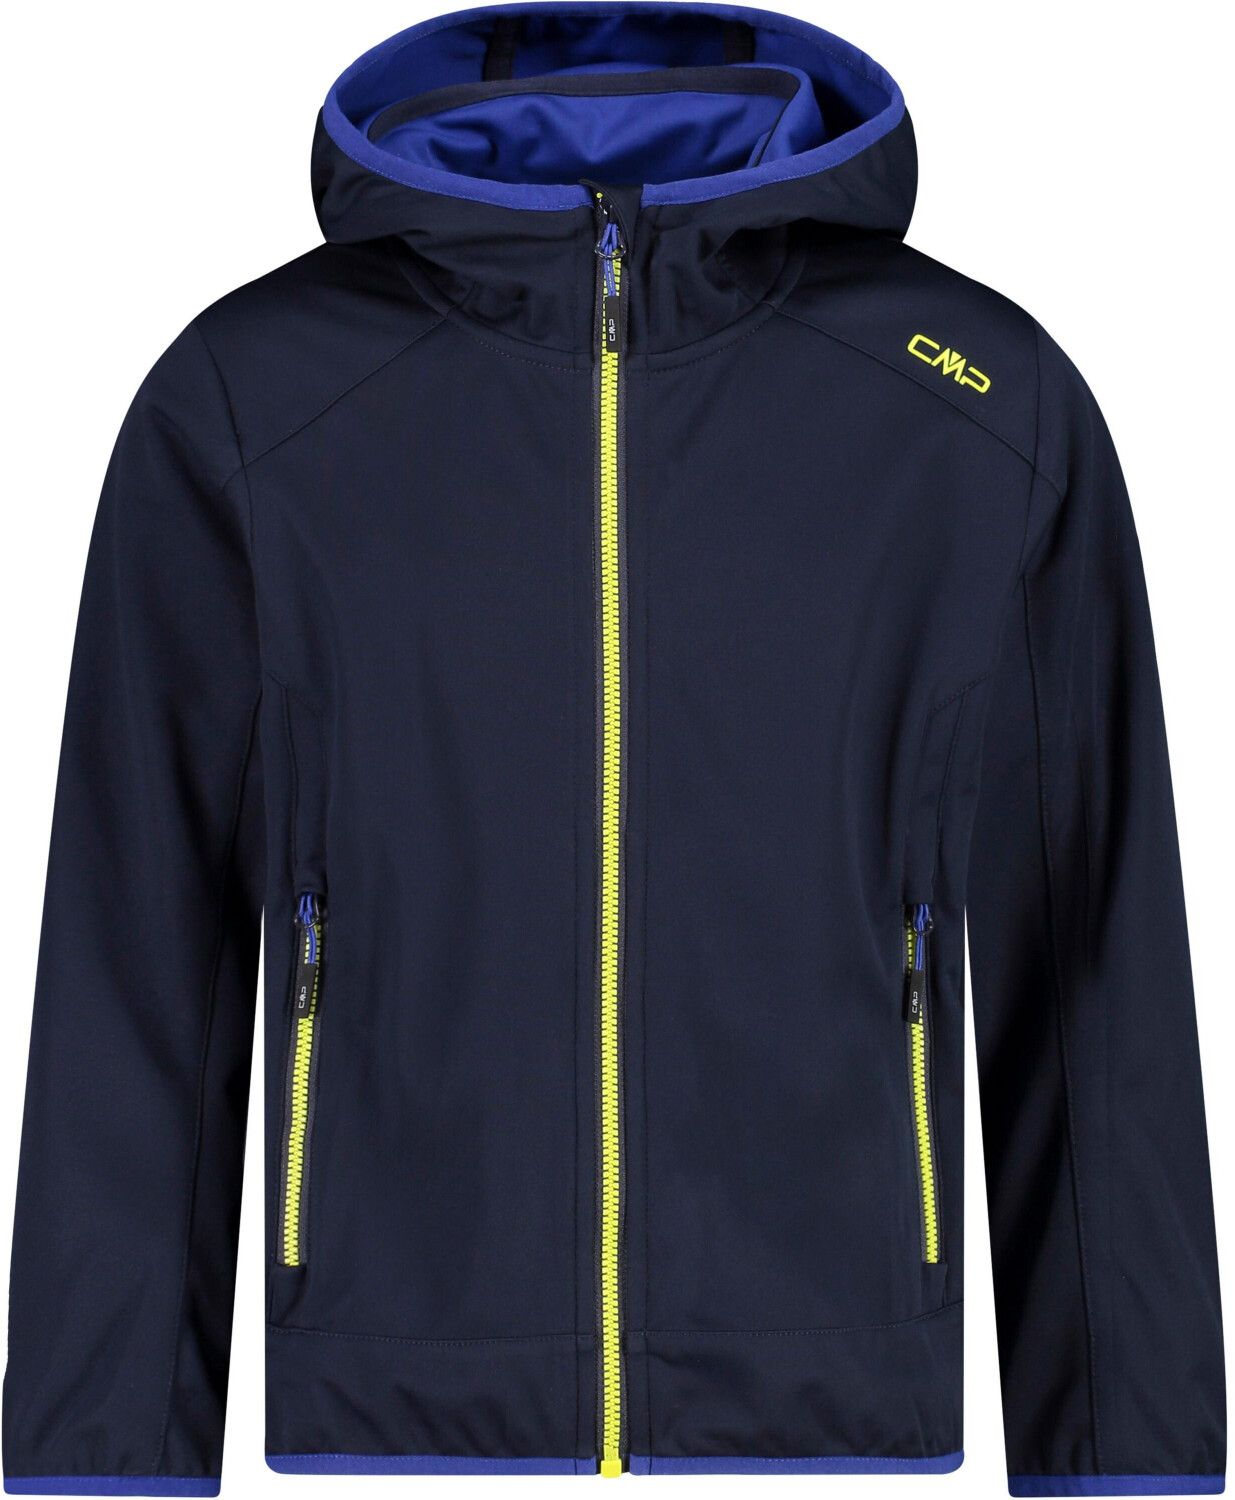 CMP Boys Softshell Jacket b.blue/bluish 26,99 | (39A5134) Preisvergleich ab € bei